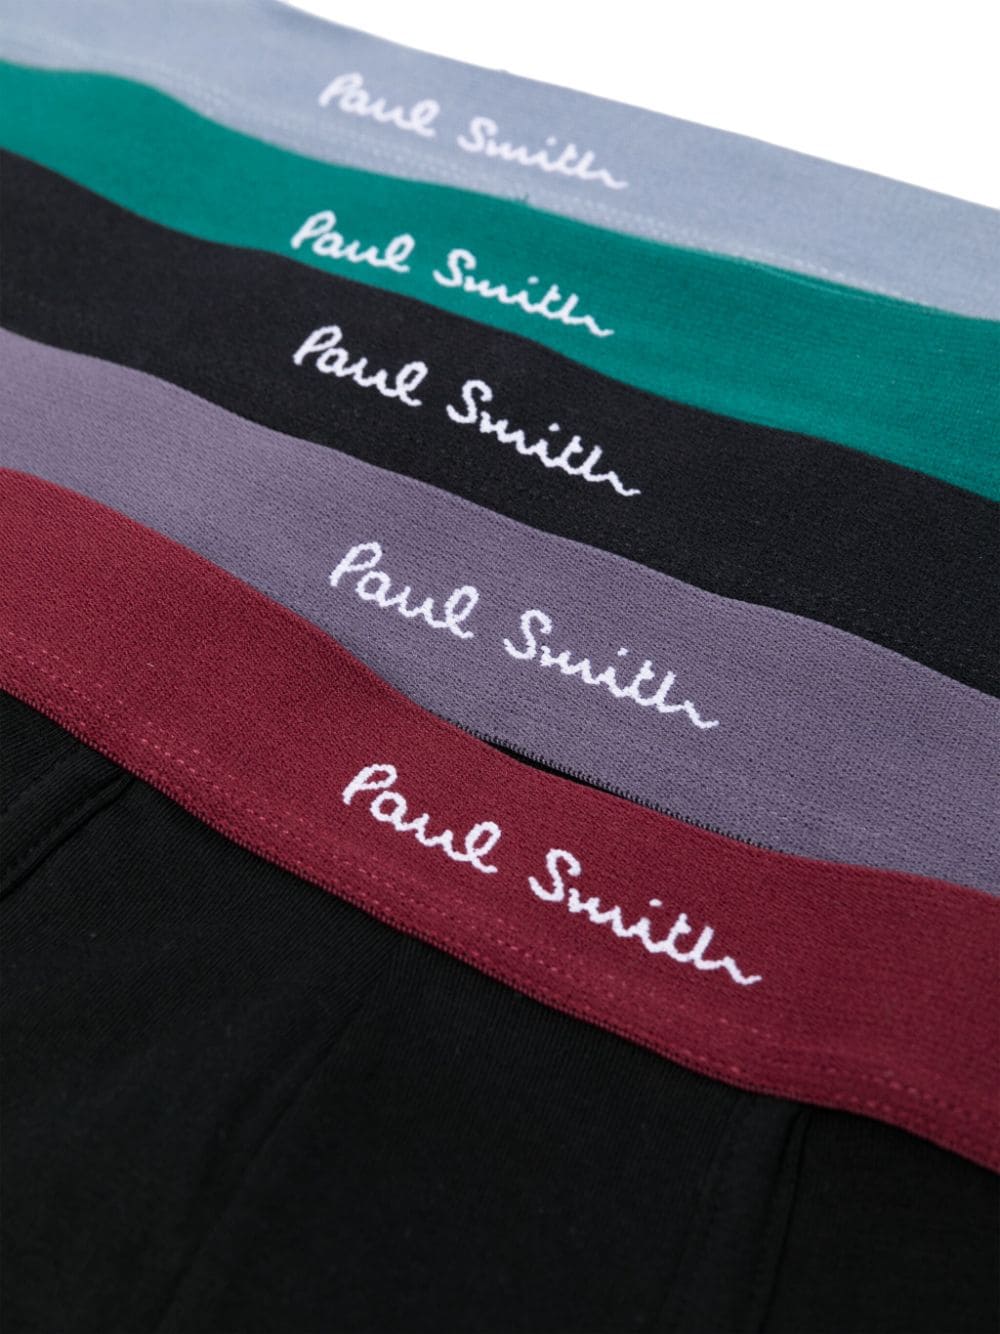 Paul Smith Underwear Black